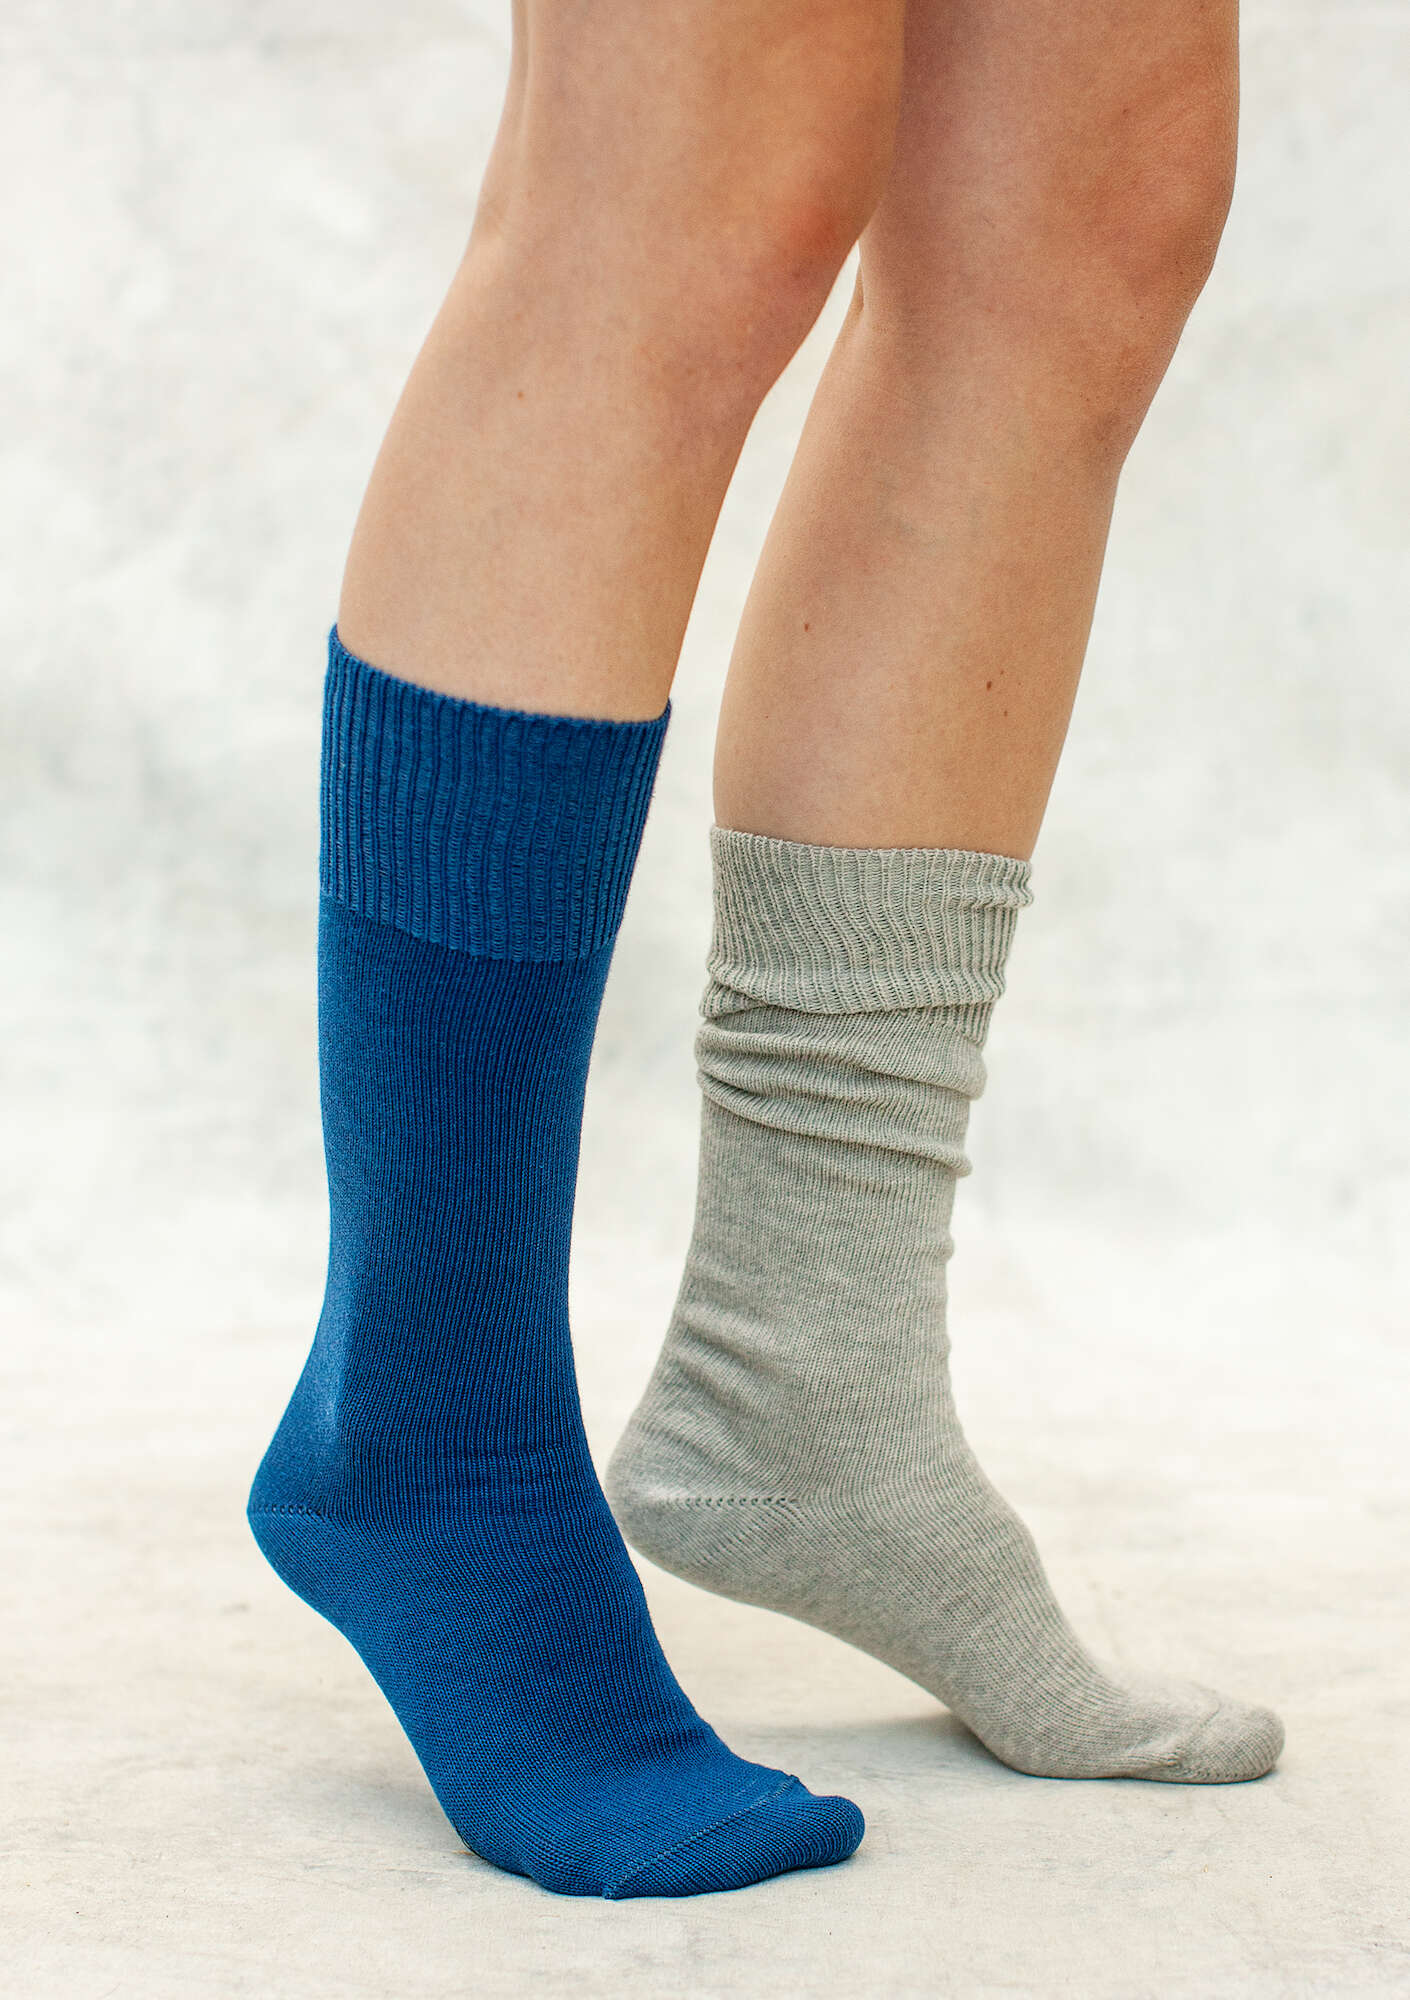 Solid-colored knee-highs indigo blue